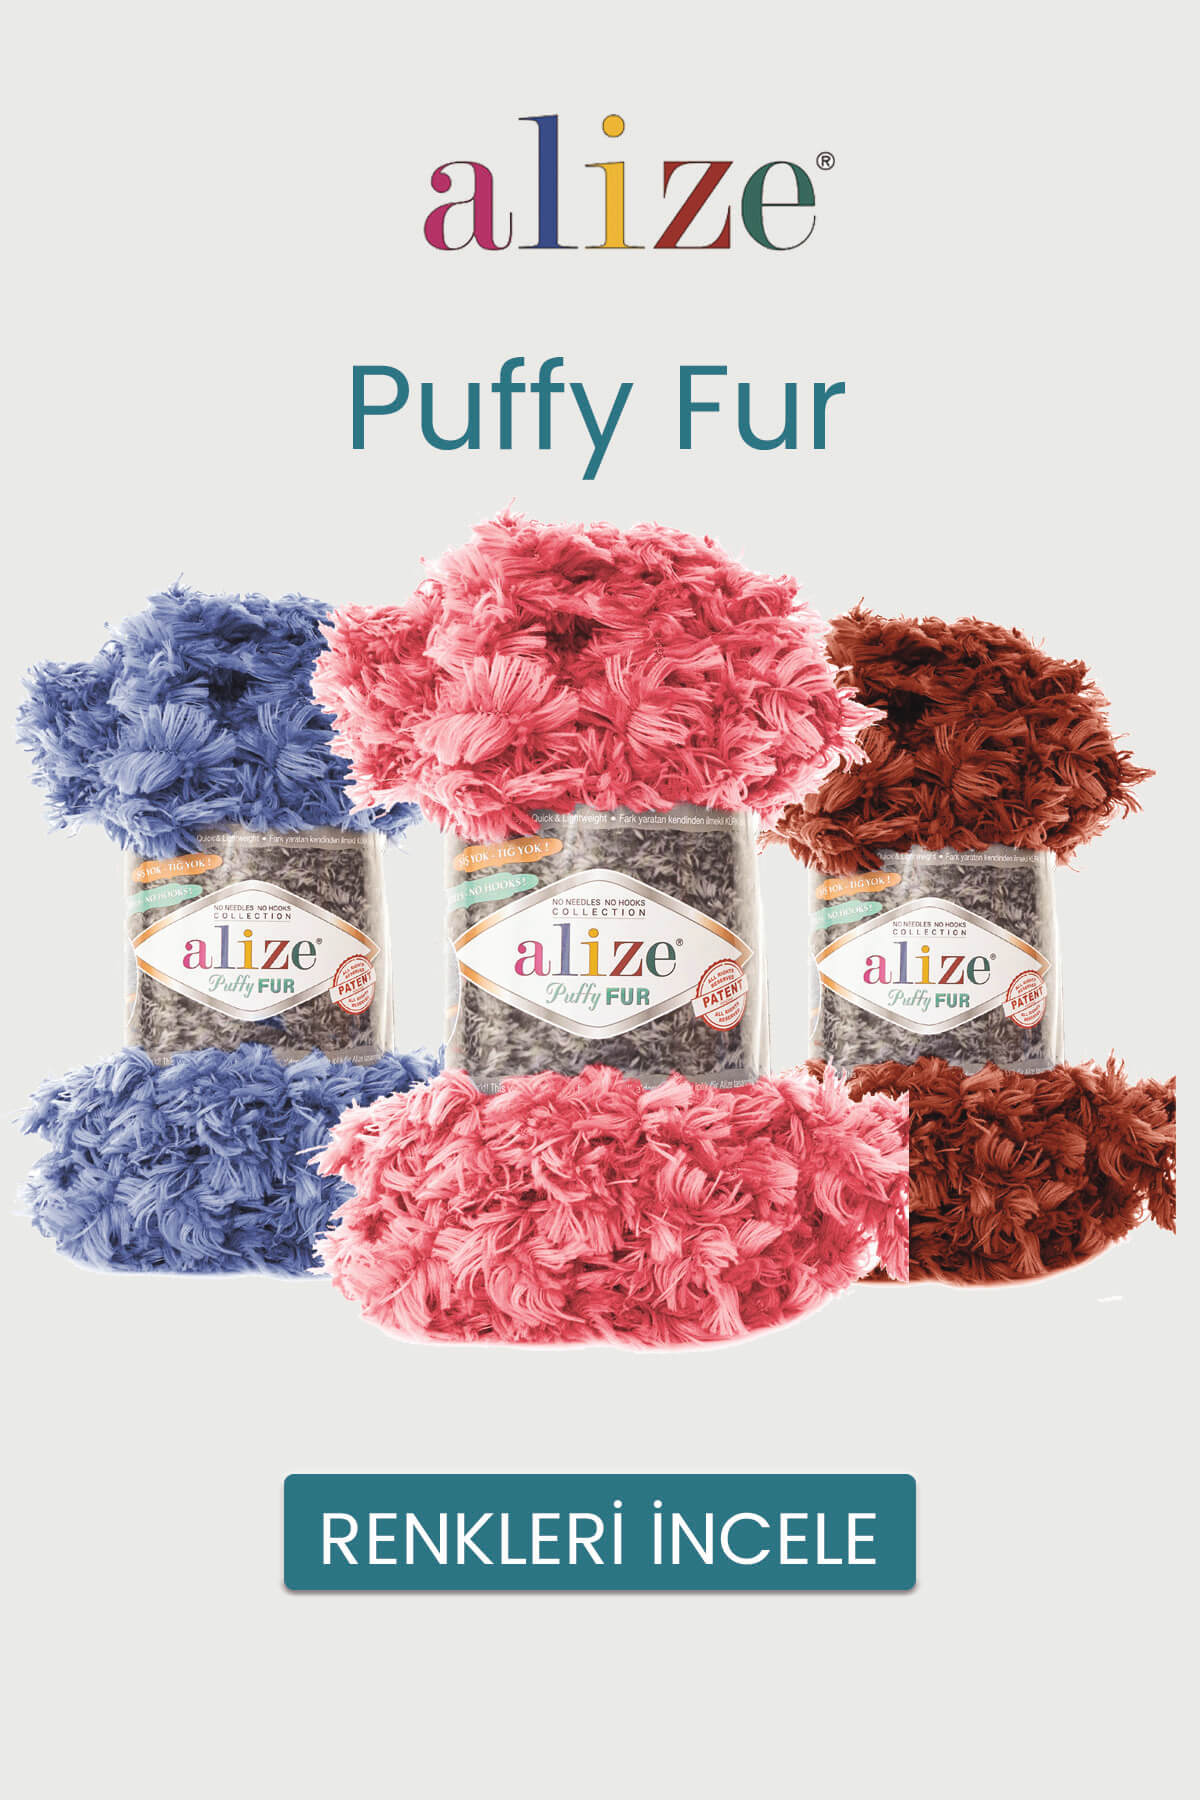 alize-puffy-fur-tekstilland